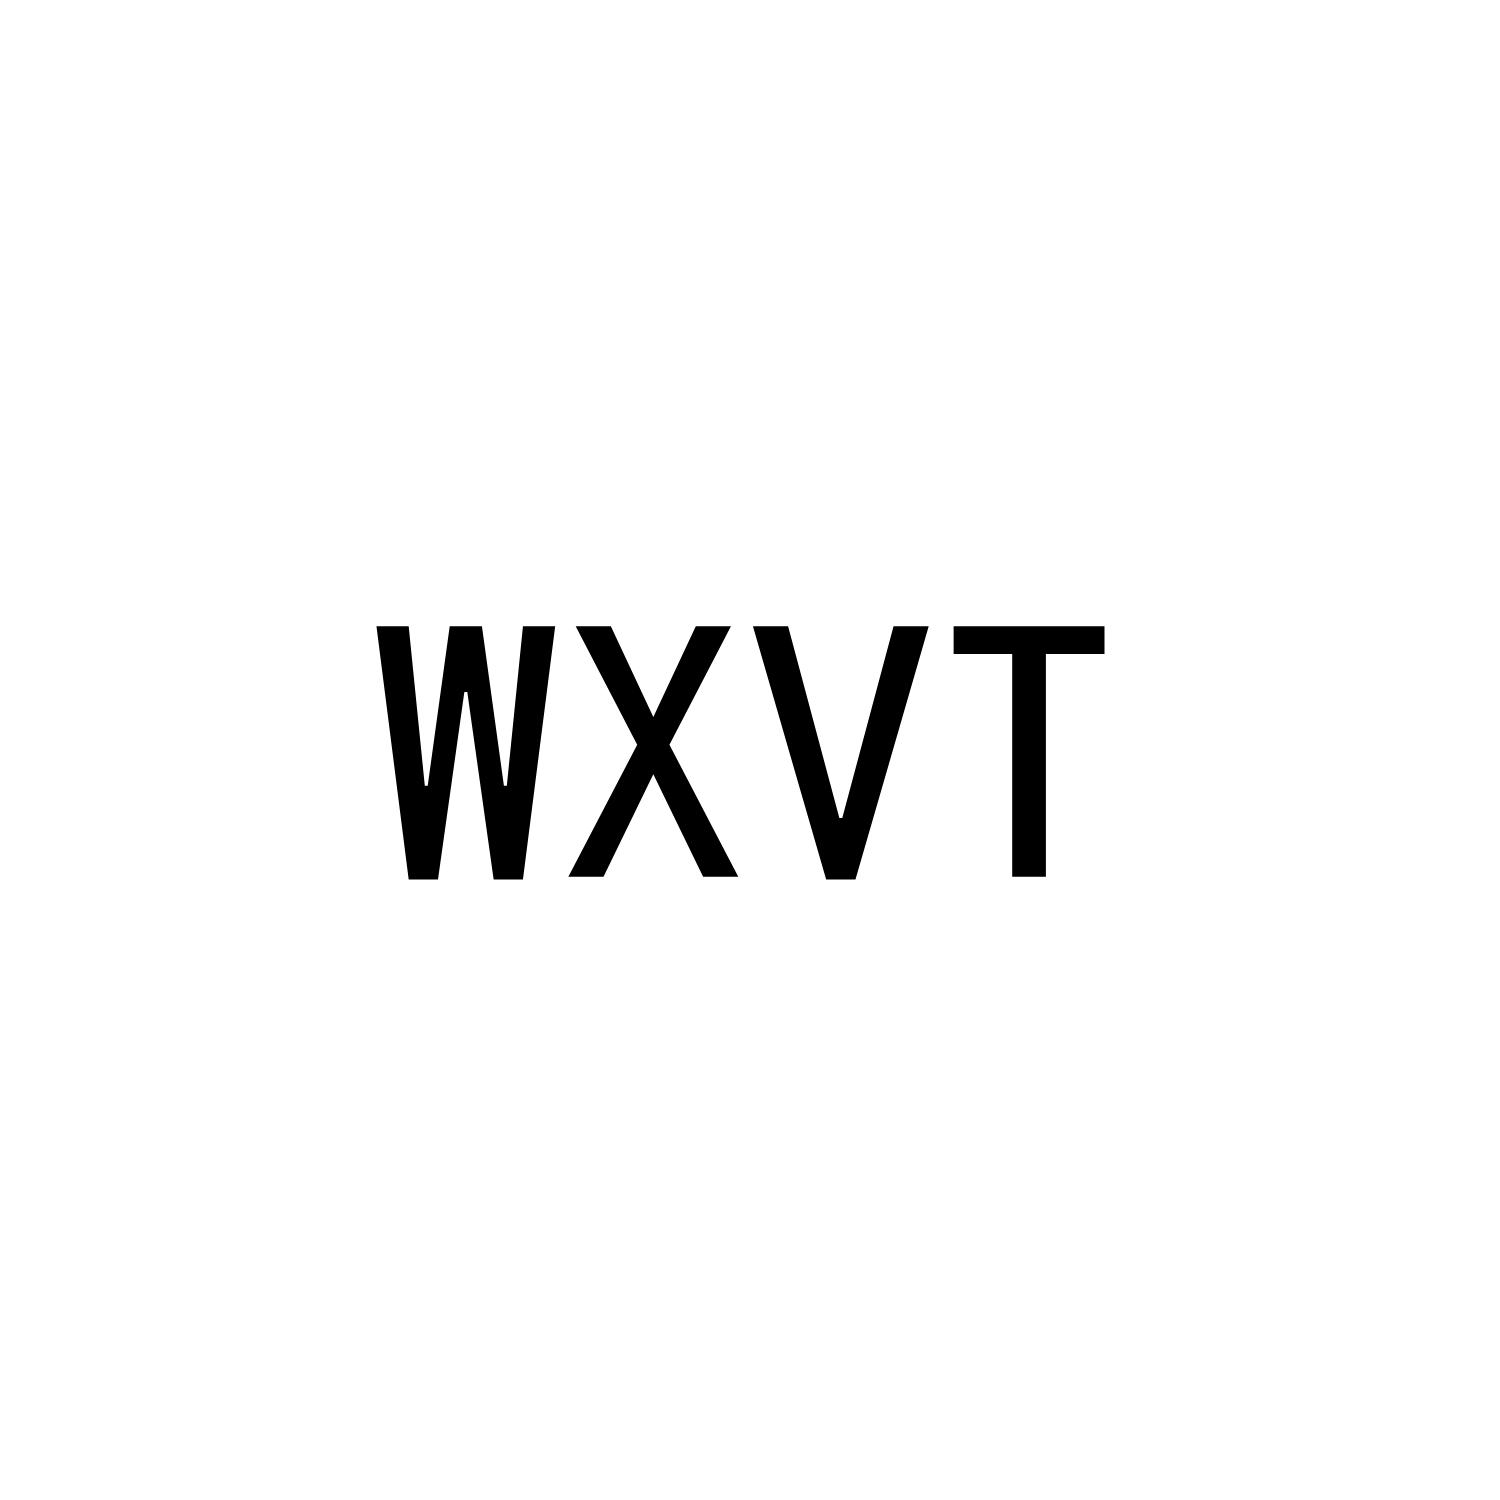 转让商标-WXVT